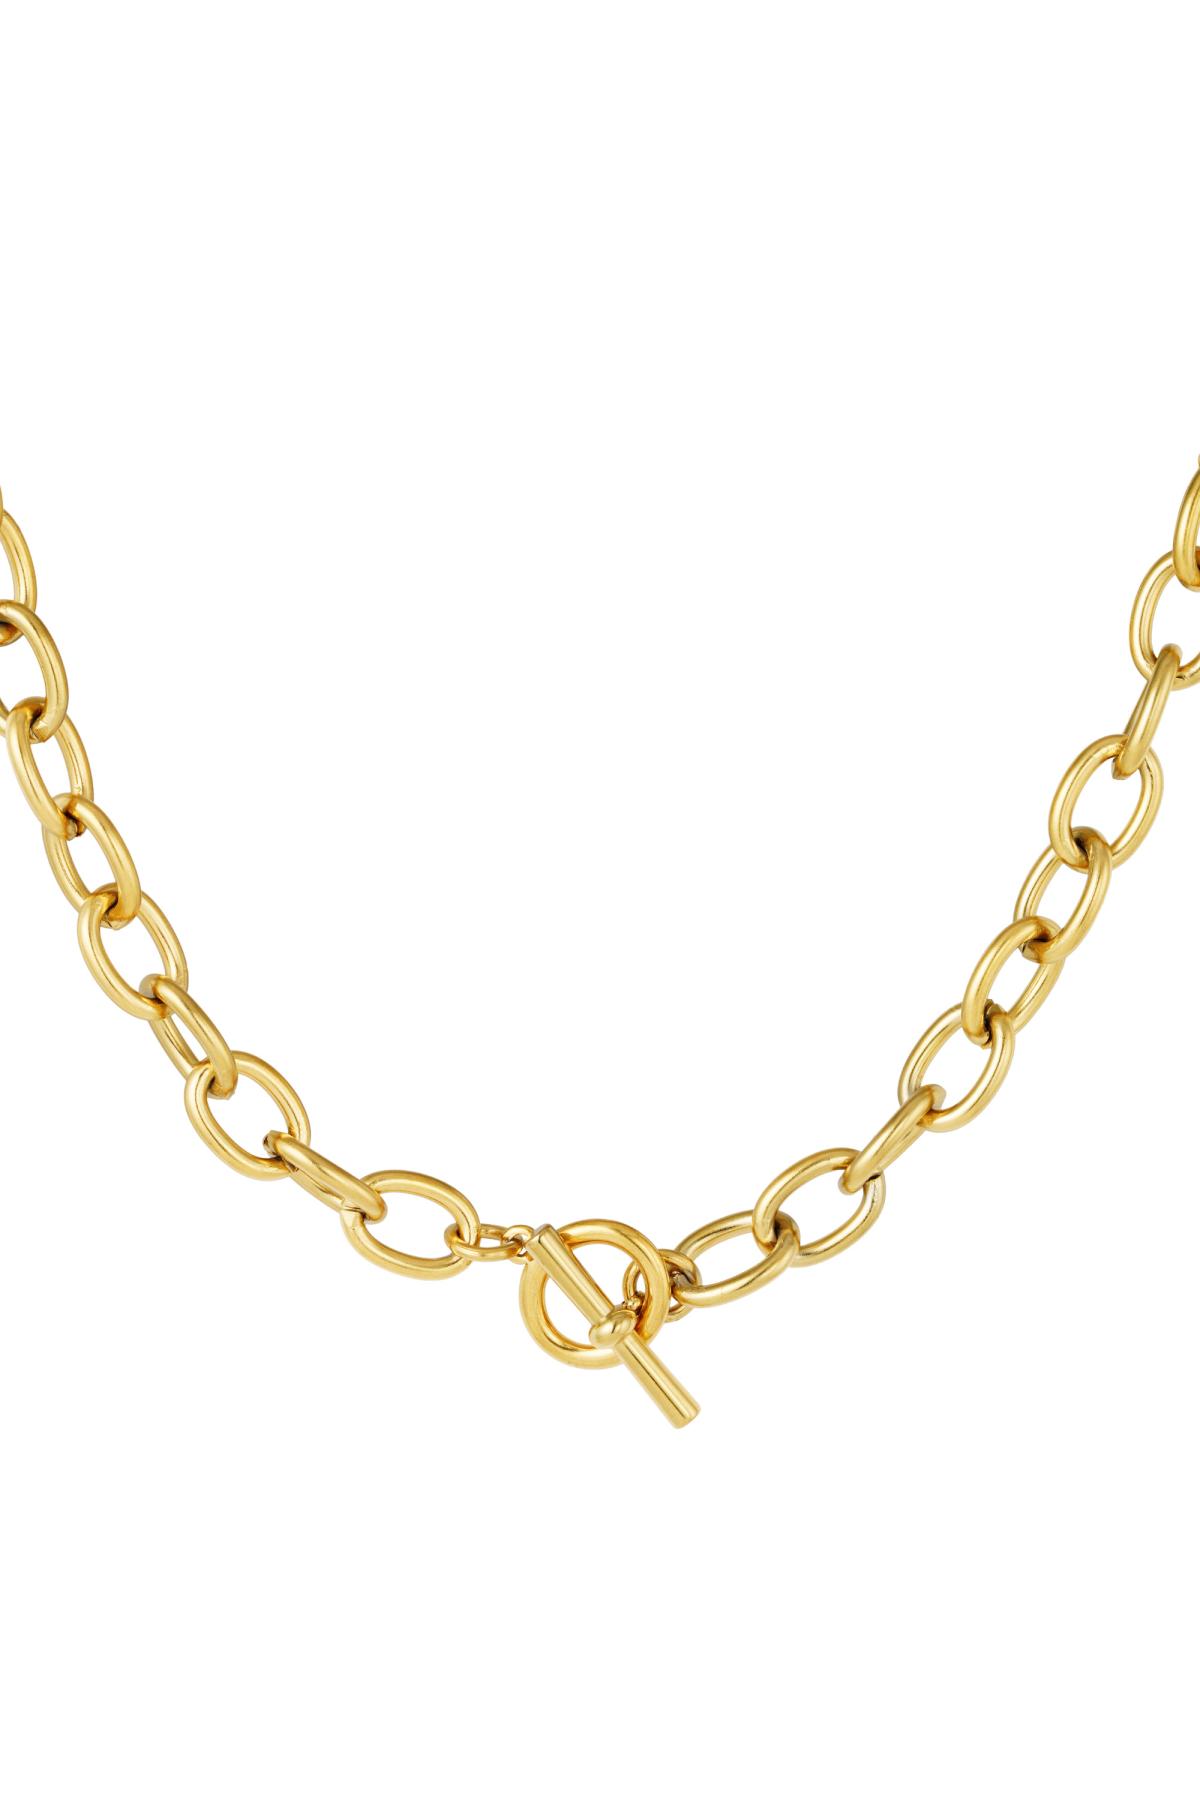 Gold / Halskette aus Edelstahl Gold 